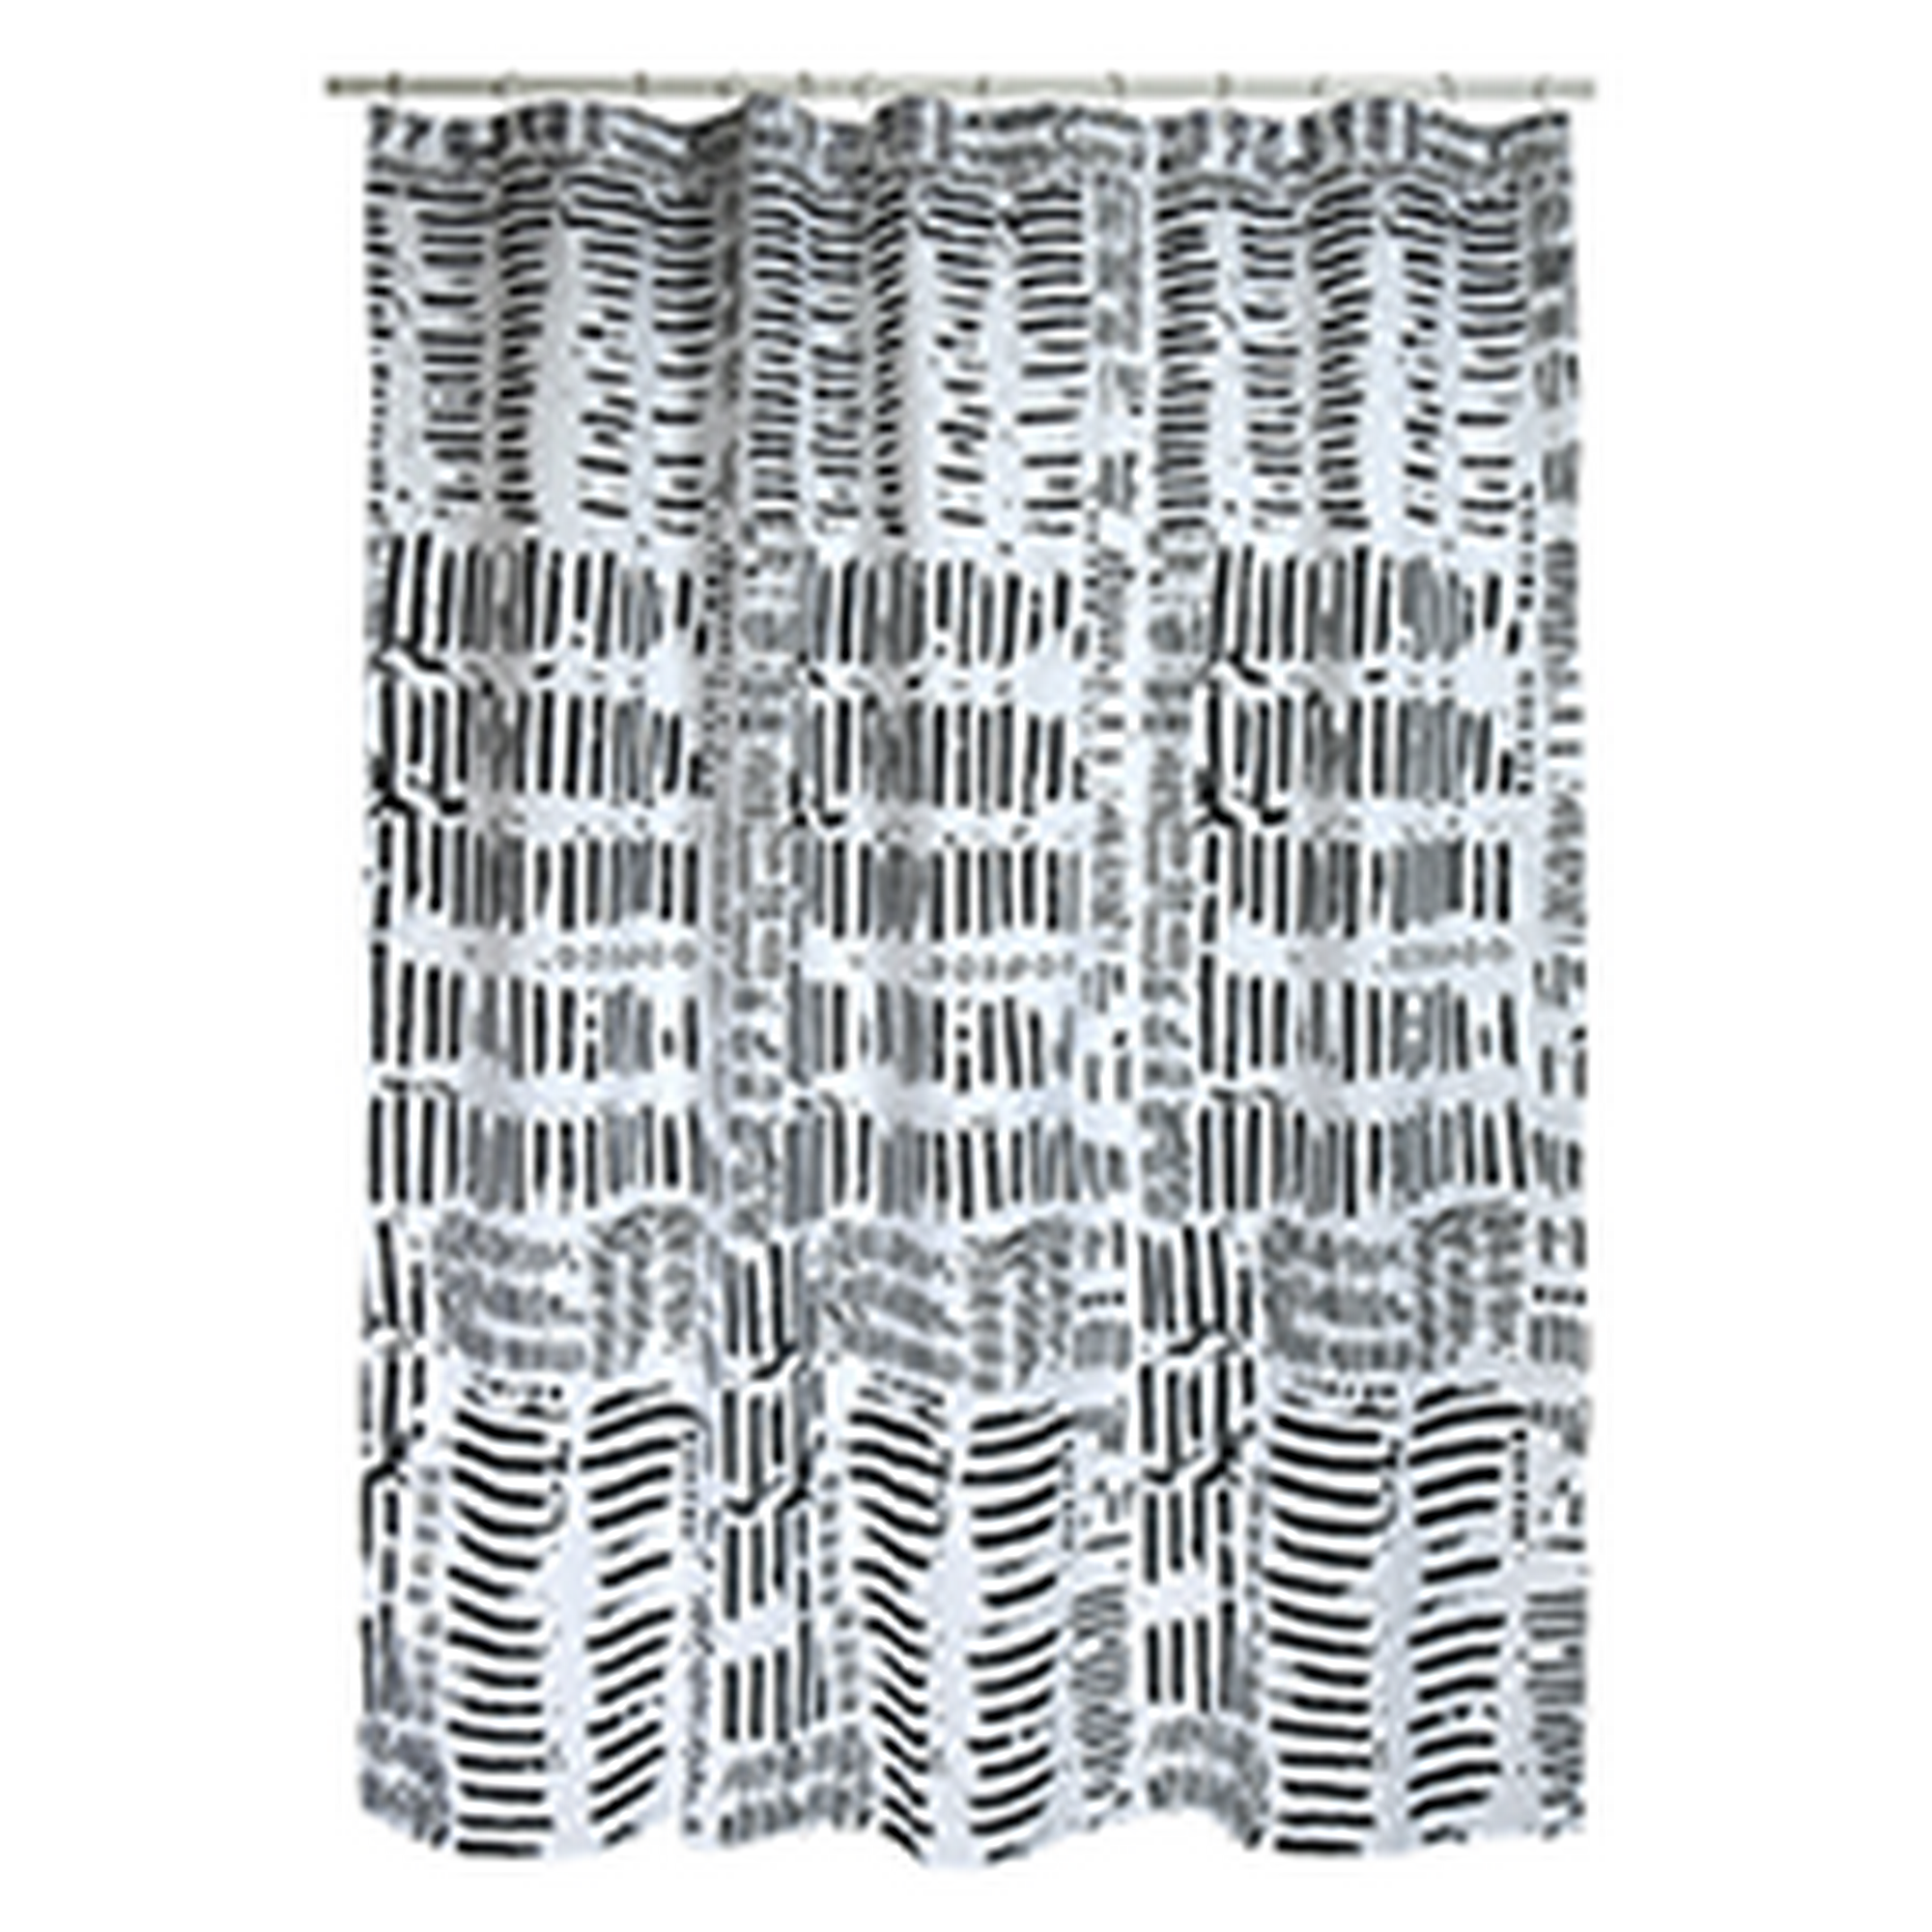 Duschvorhang 'Connection' Textil schwarz/weiß 180 x 200 cm + product picture